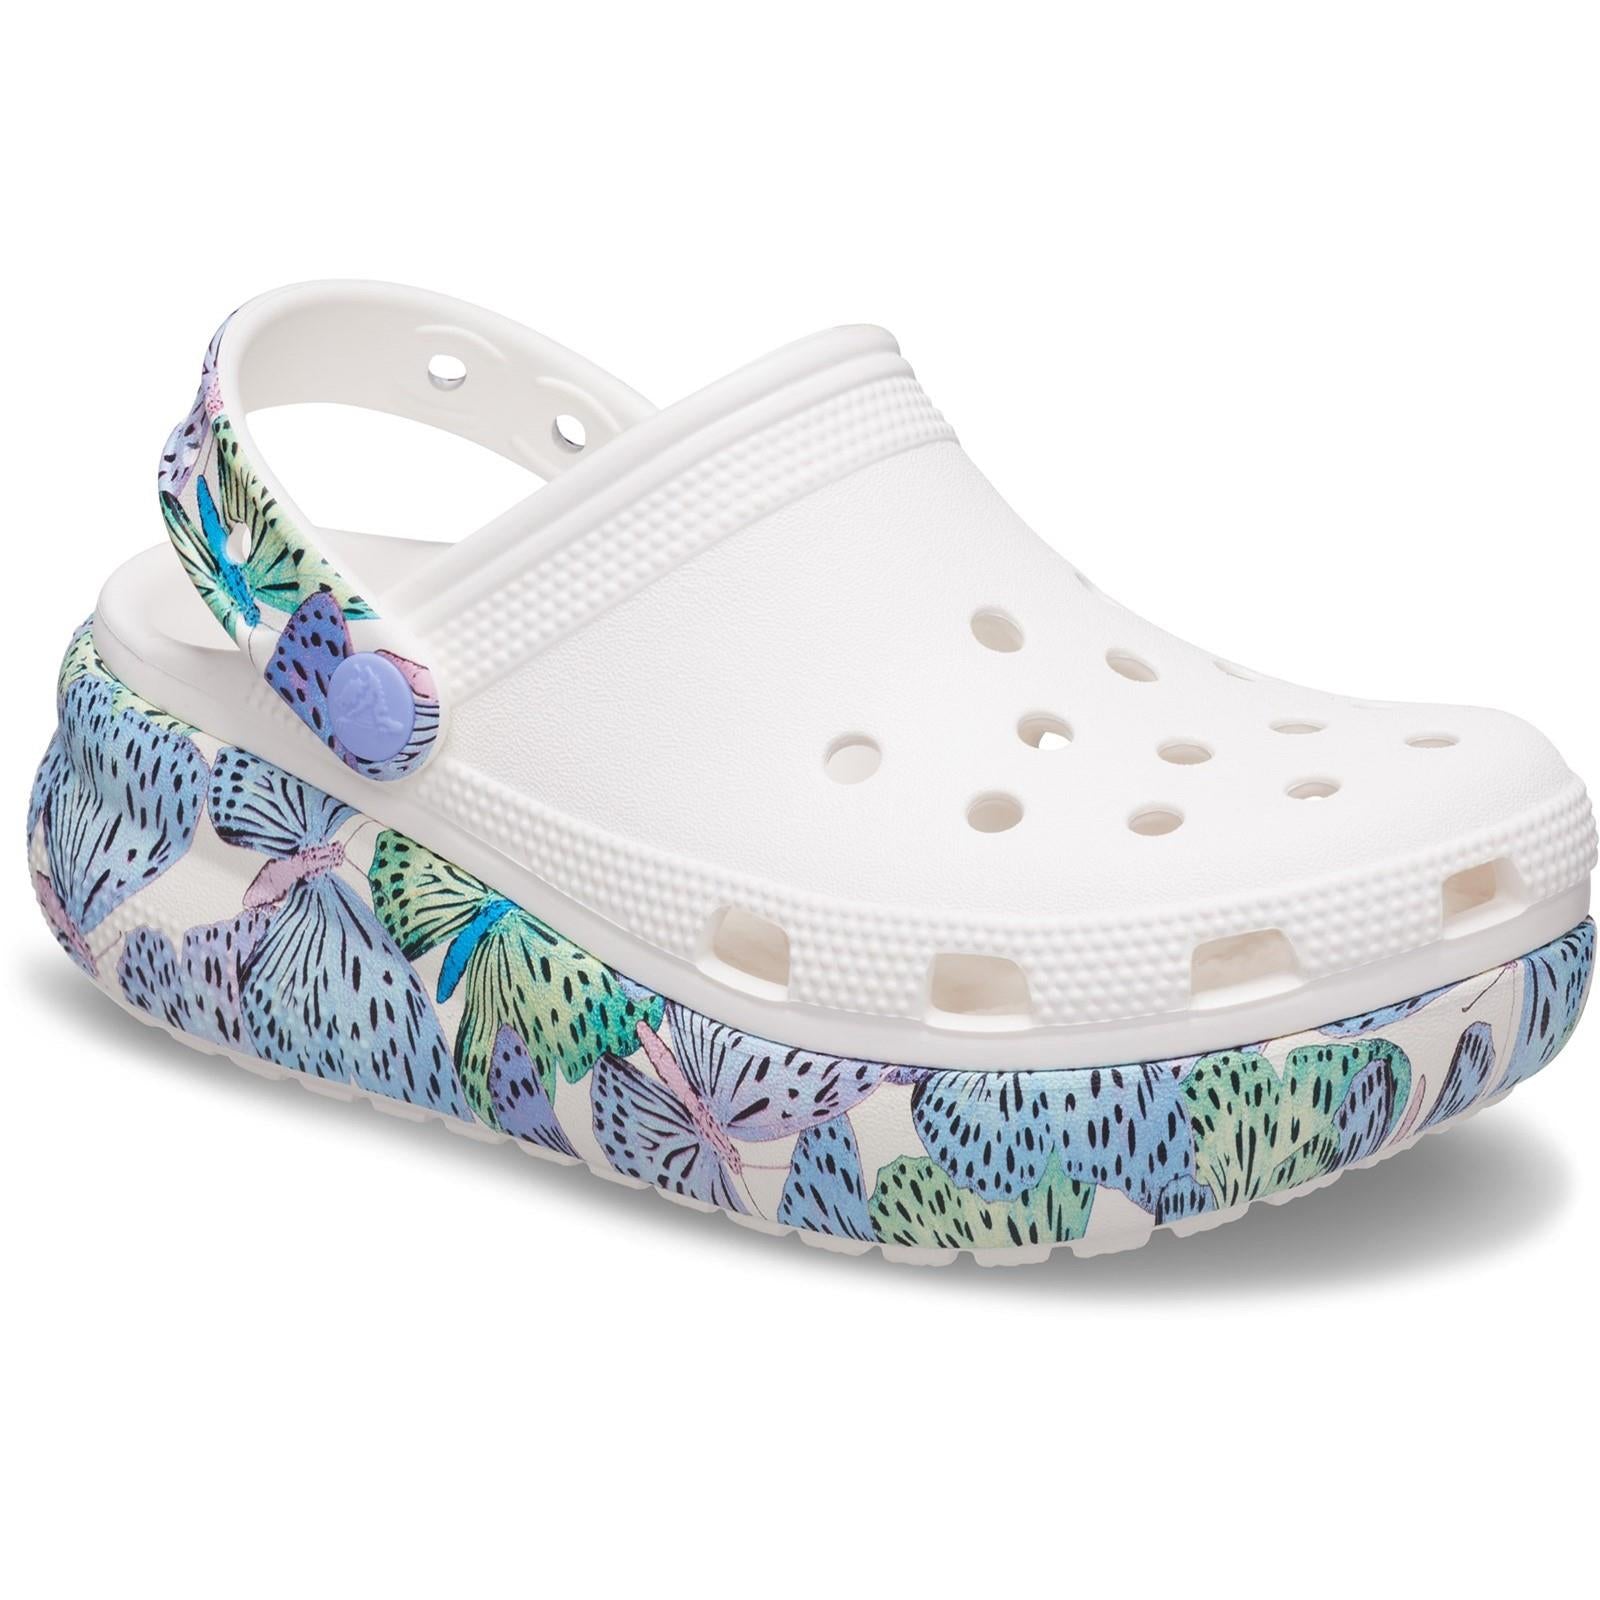 Crocs Classic Cutie Butterfly kids mule sandal slip-on clog #208298